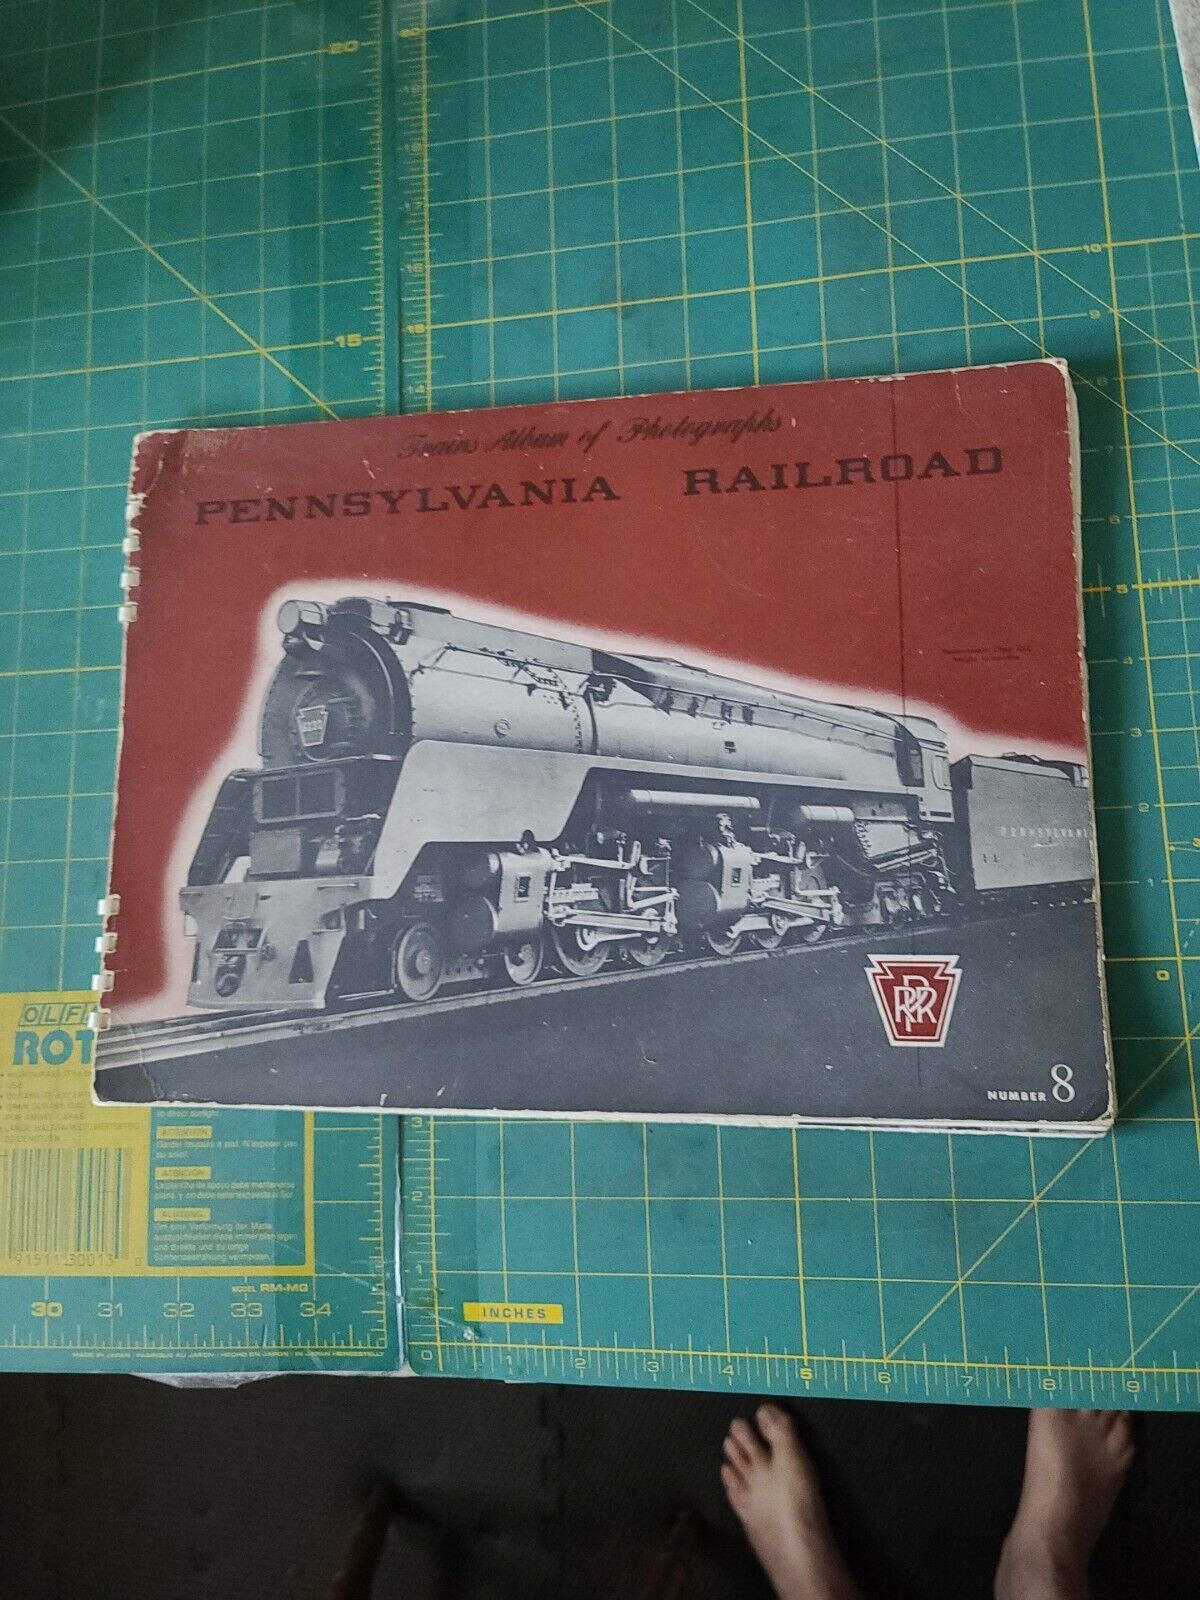 Trains Album of Photographs #8 Pennsylvania Railroad Spiral Bound 1944 PRR